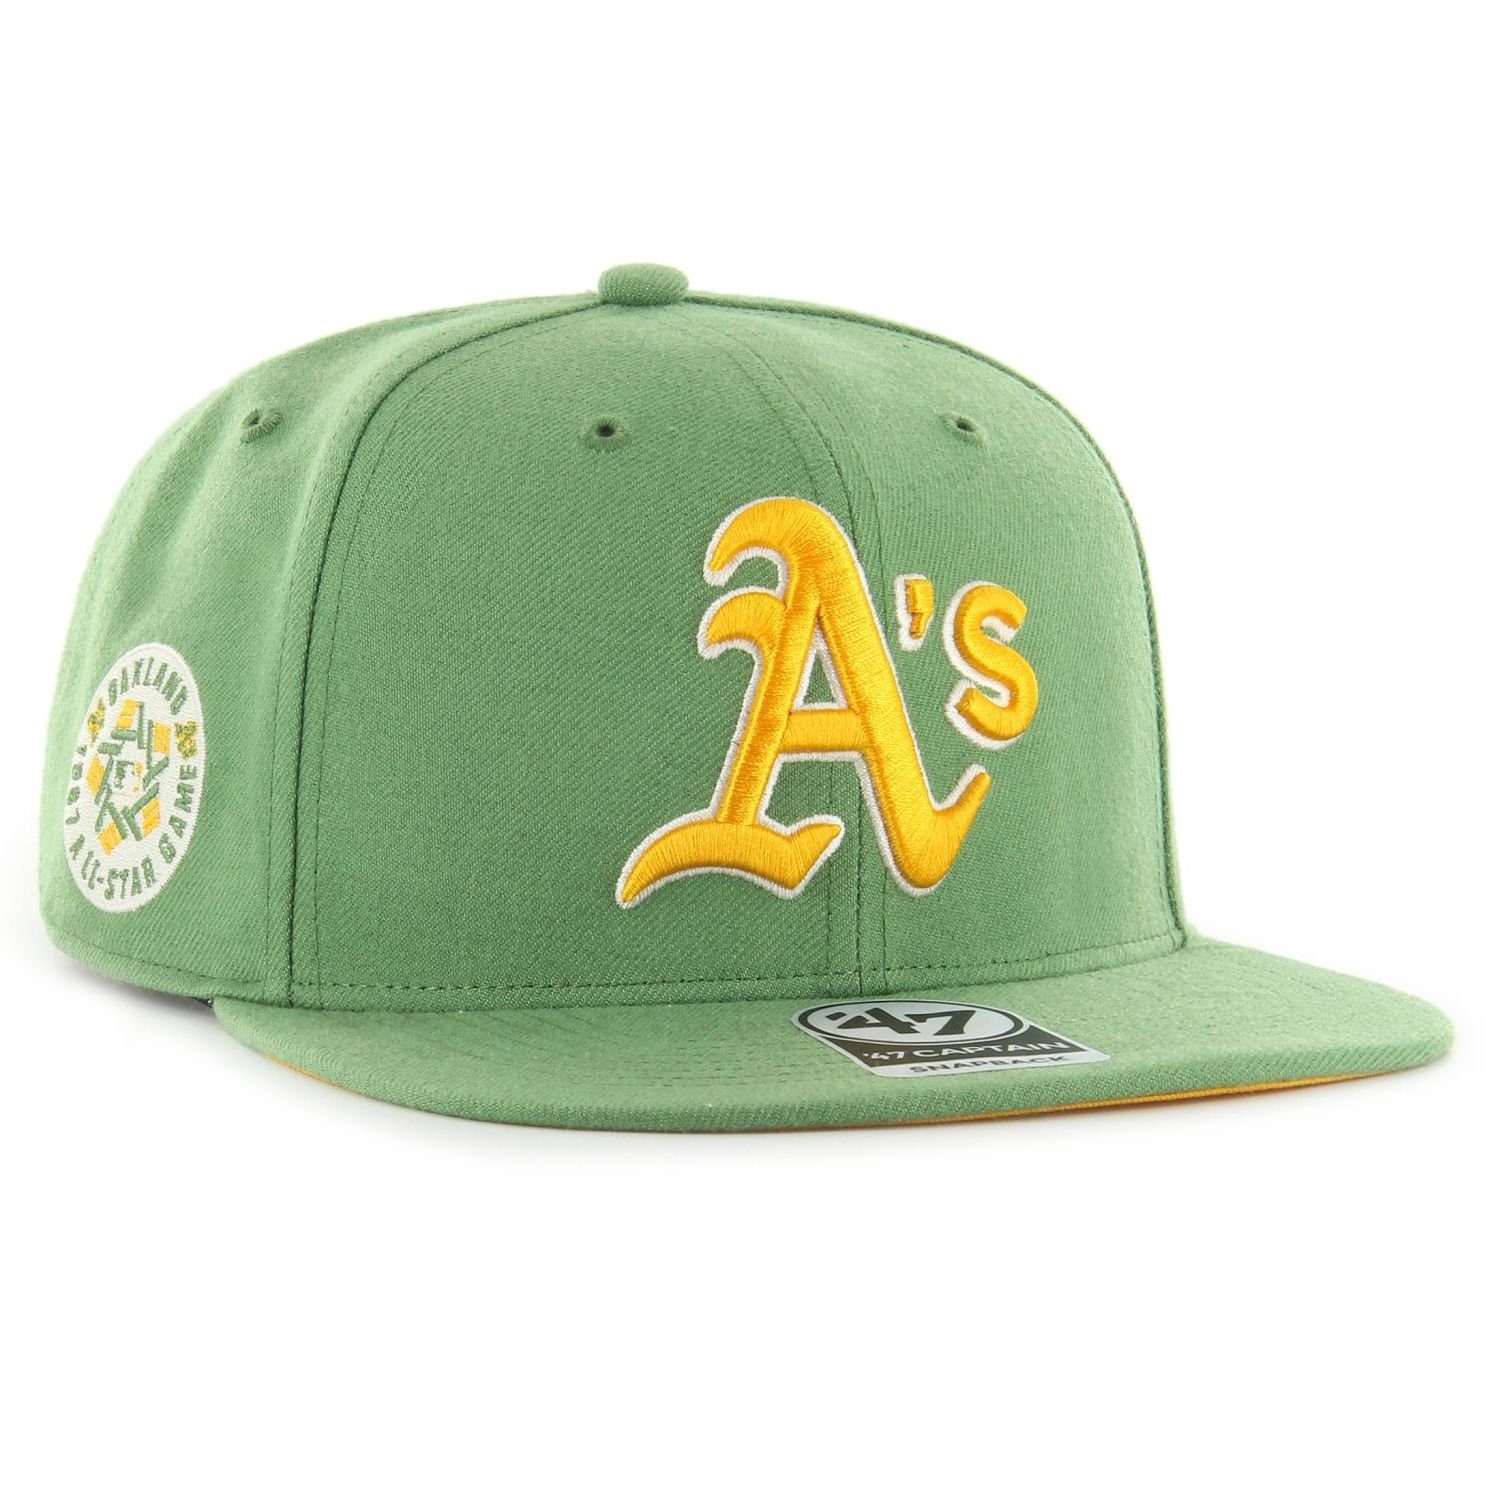 GAME Brand STAR ALL Oakland Snapback '47 Athletics Cap